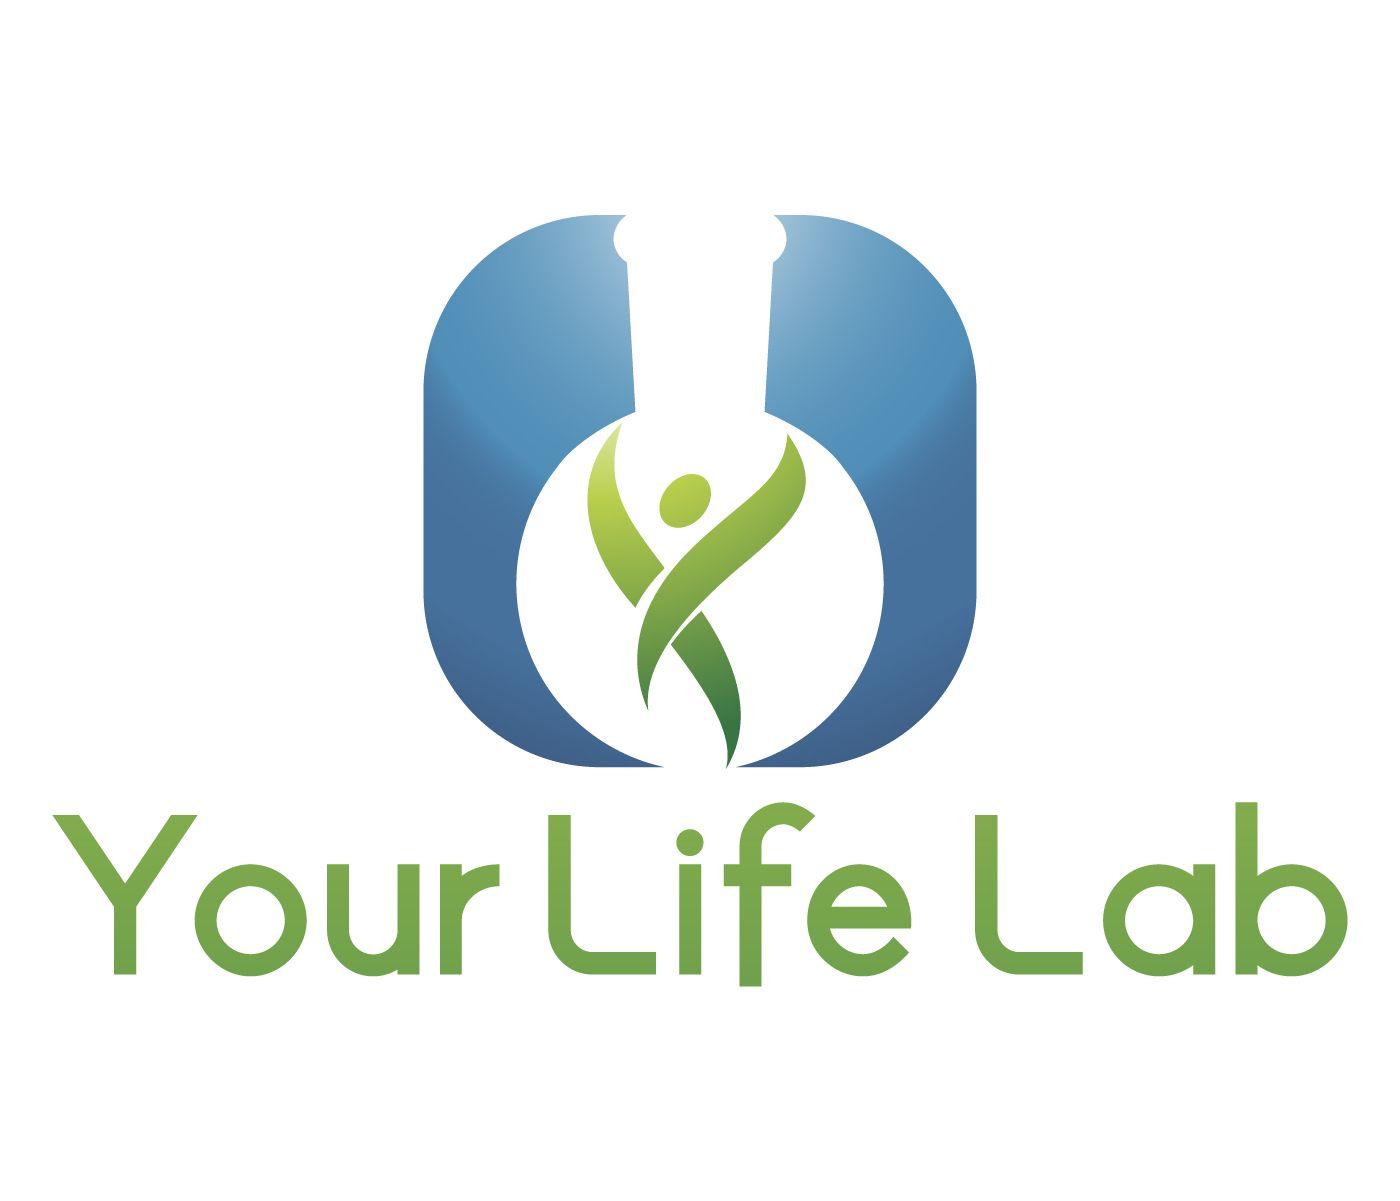 BV Logo - Modern, Elegant Logo Design for Your Life Lab by Design Ninja 47